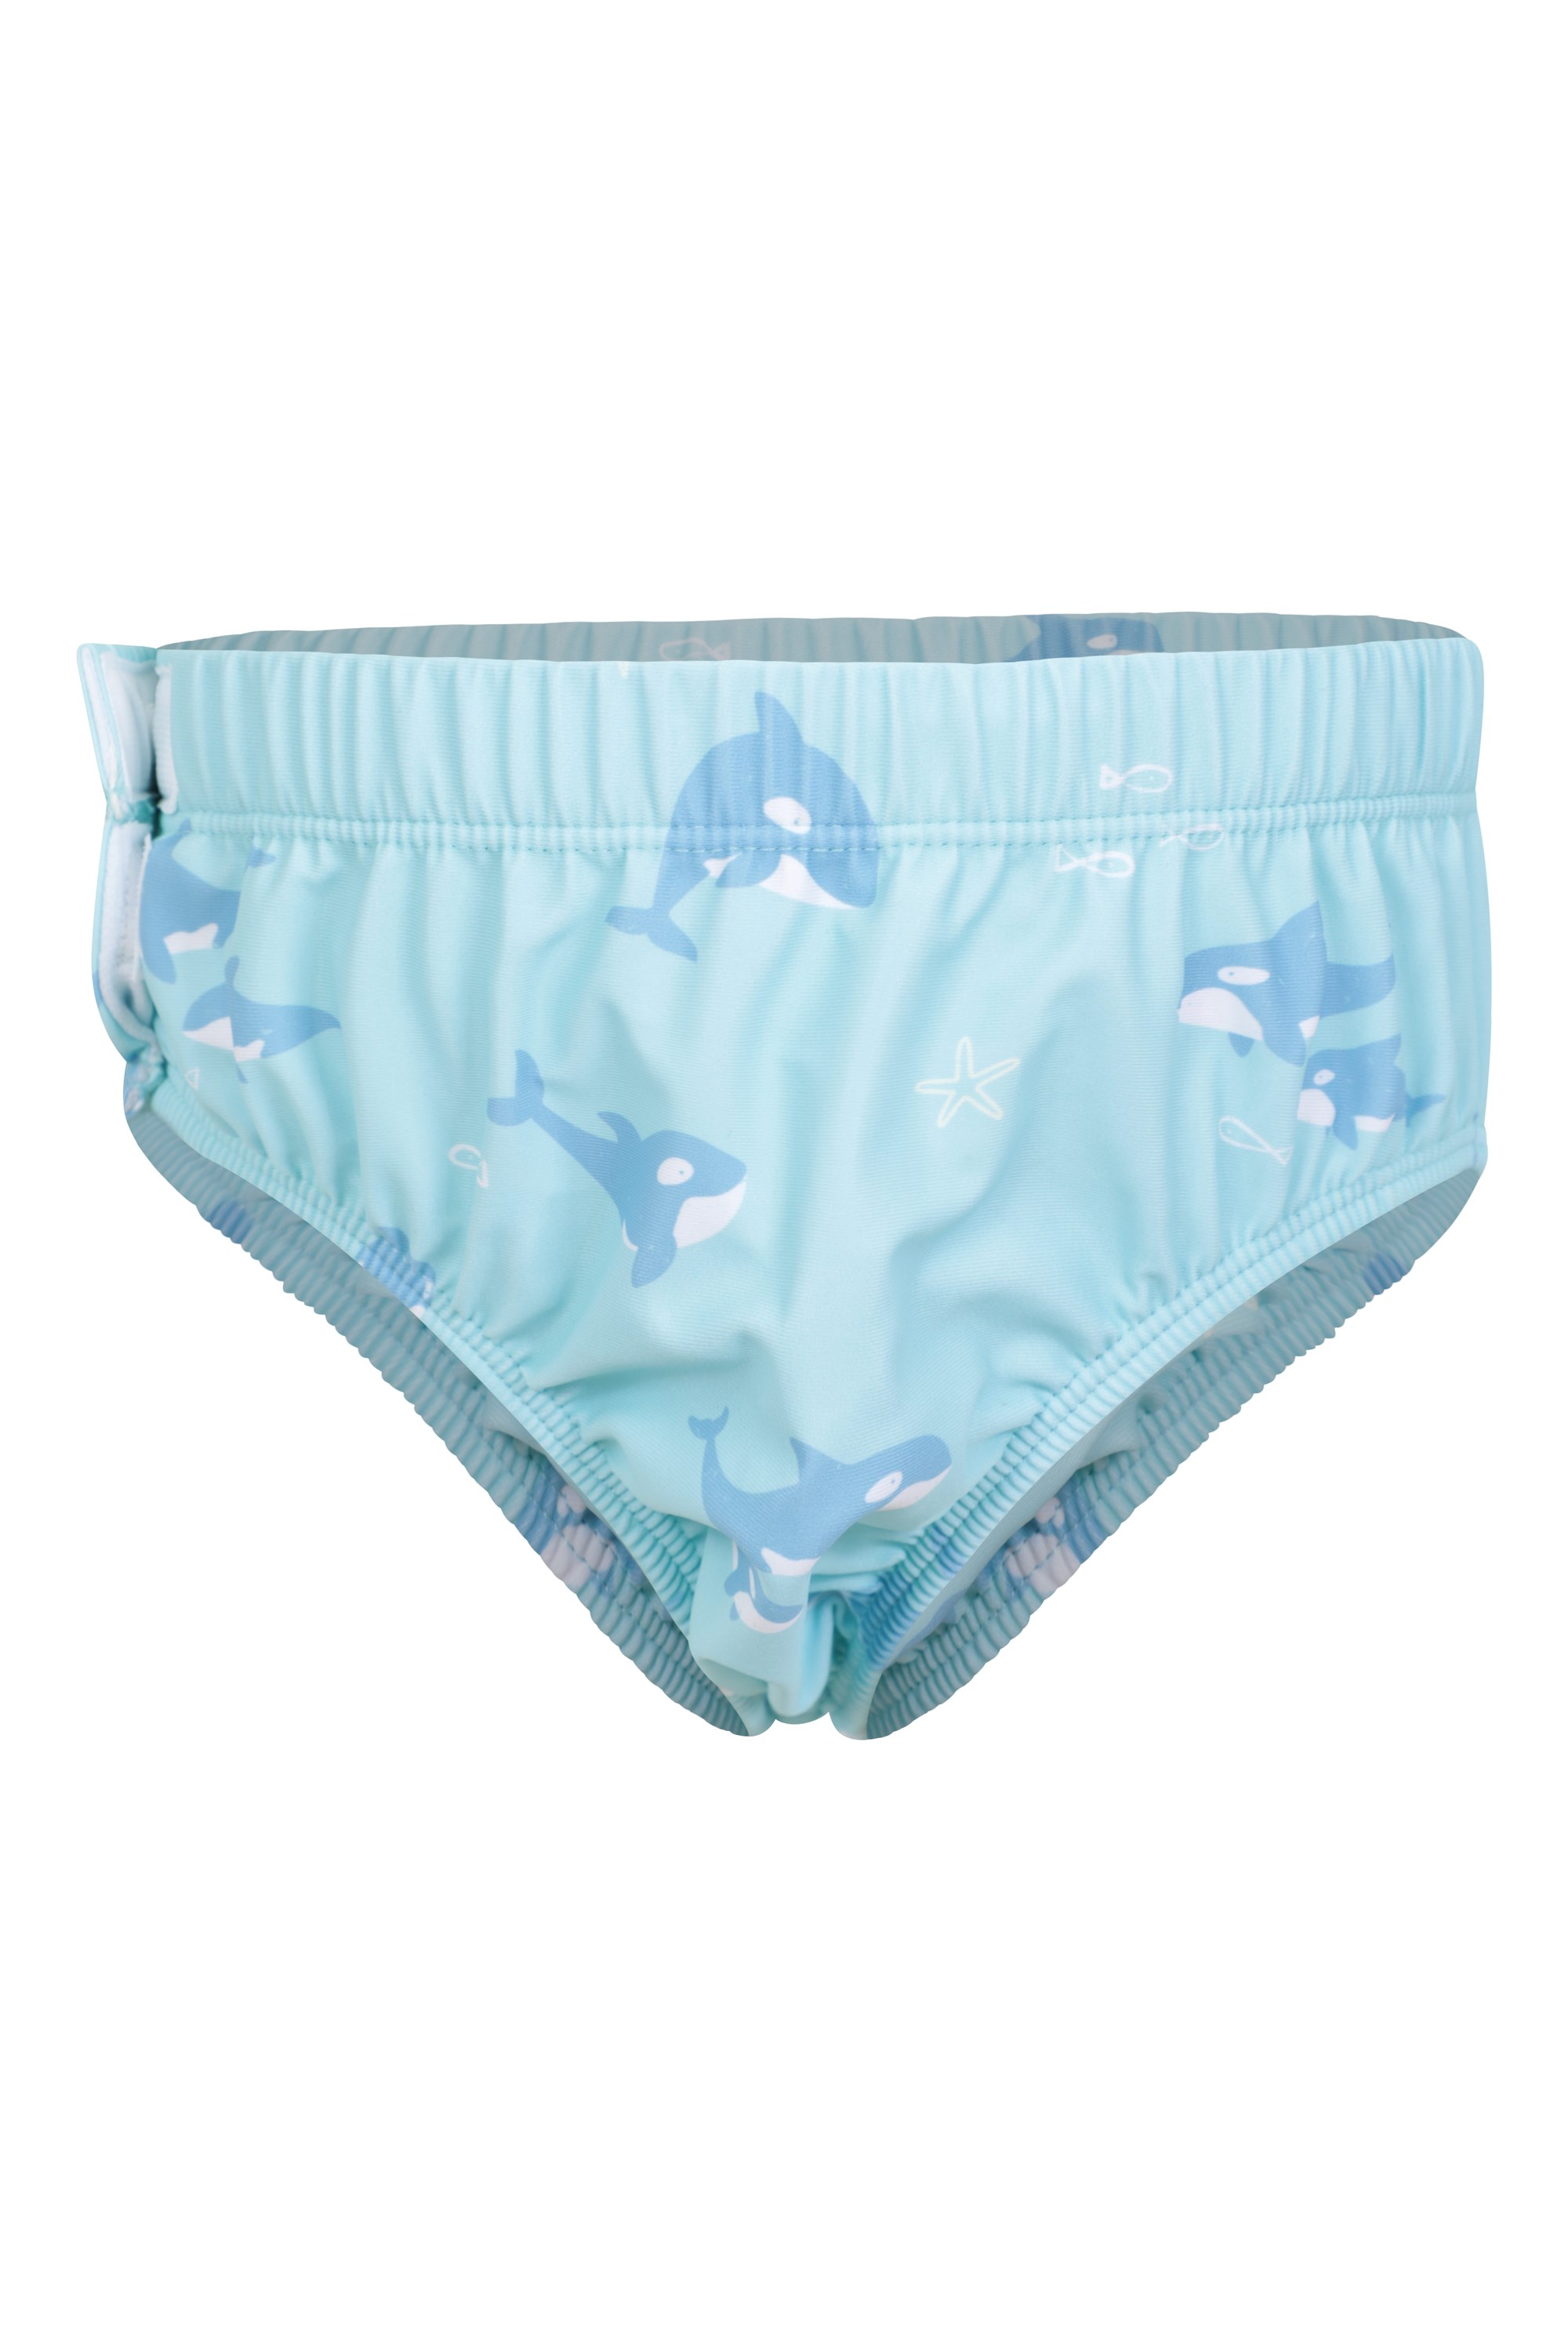 Mountain Warehouse Mountain Warehouse Unisex Baby Swim Nappy Kids Swimwear with Soft Cotton Lining 